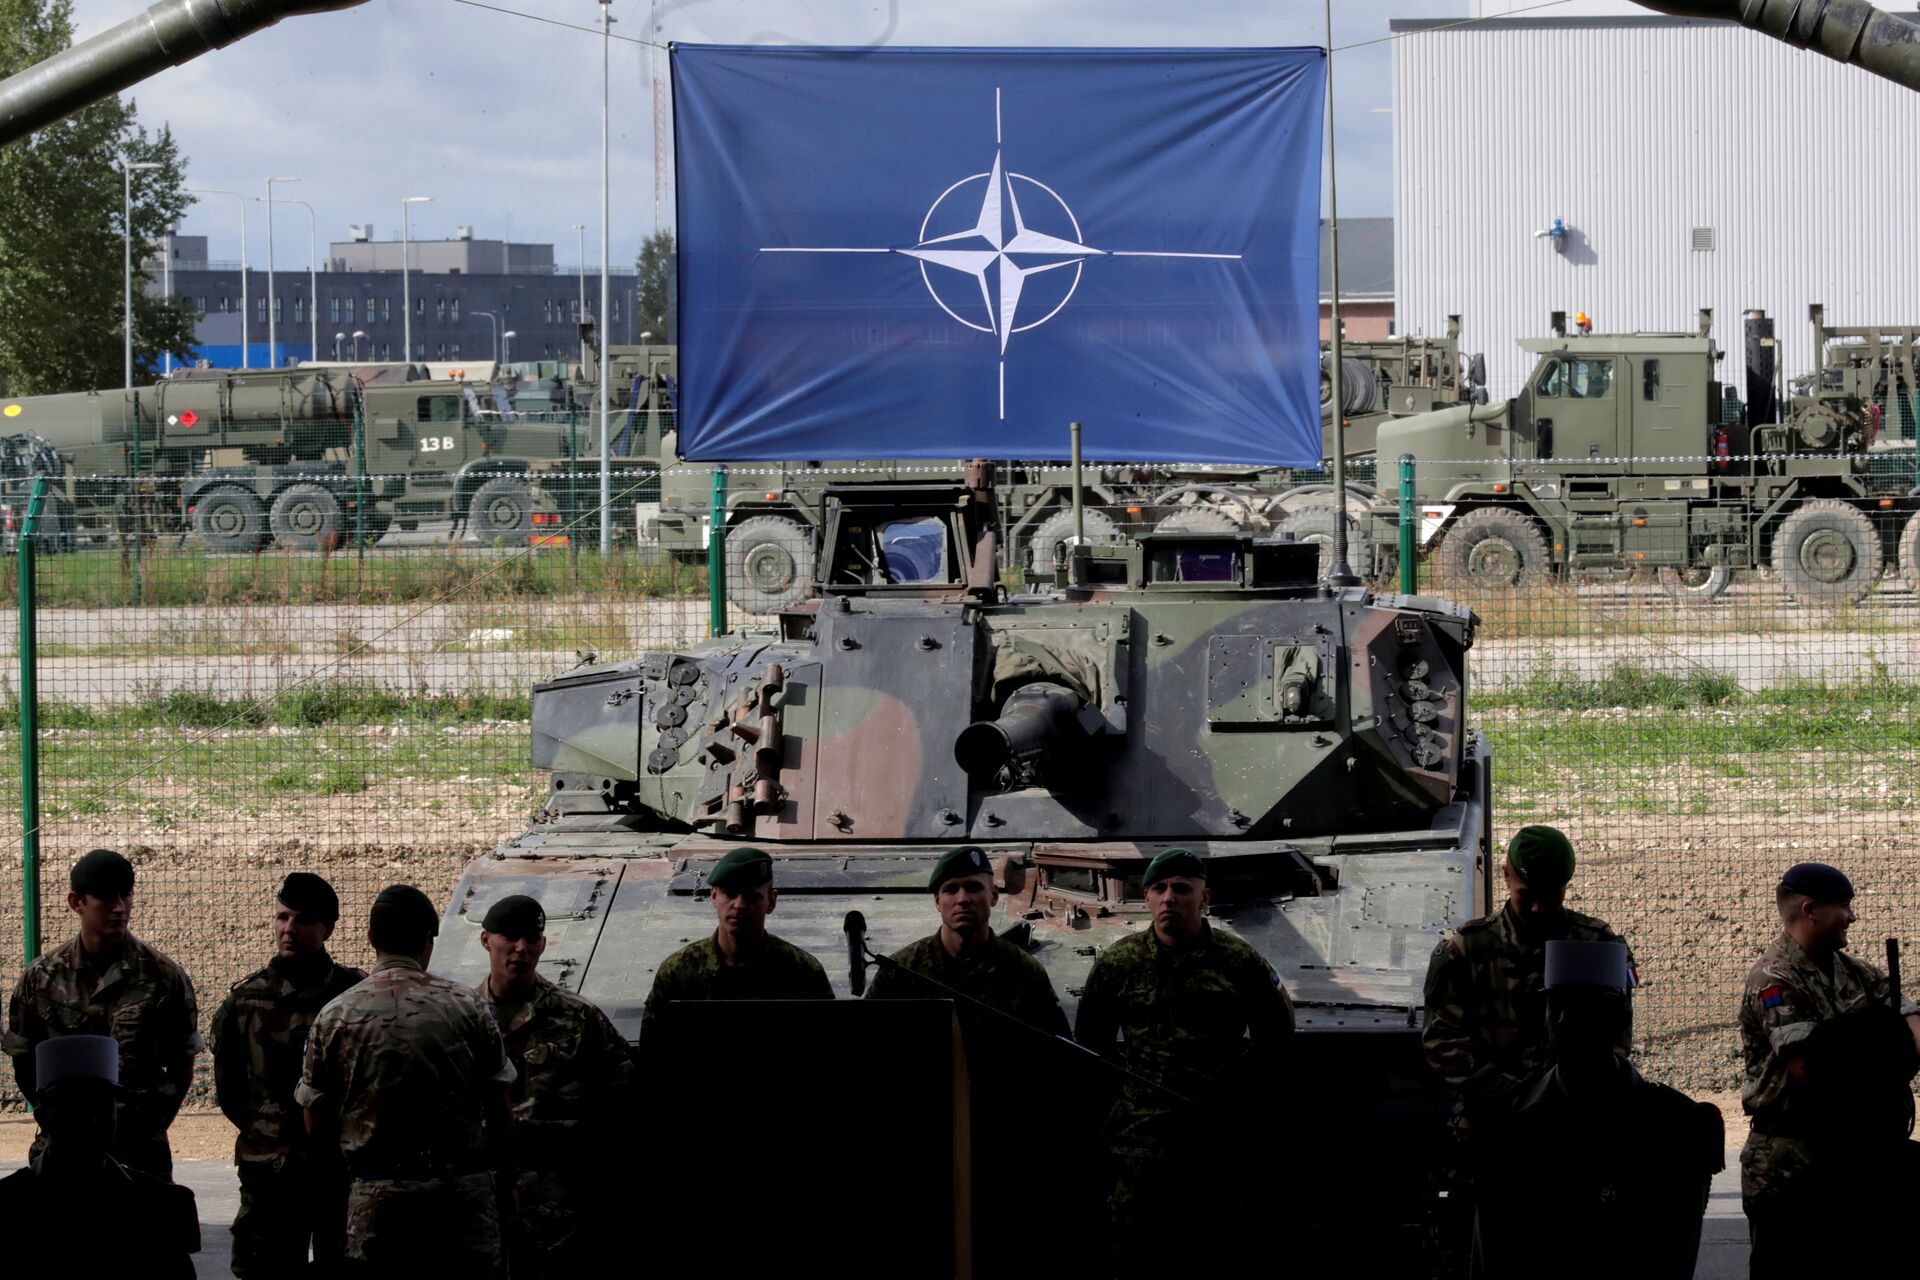 NATO eFP battle group soldiers wait for NATO Secretary General Jens Stoltenberg visit in Tapa military base, Estonia September 6, 2017 - Sputnik International, 1920, 15.02.2022